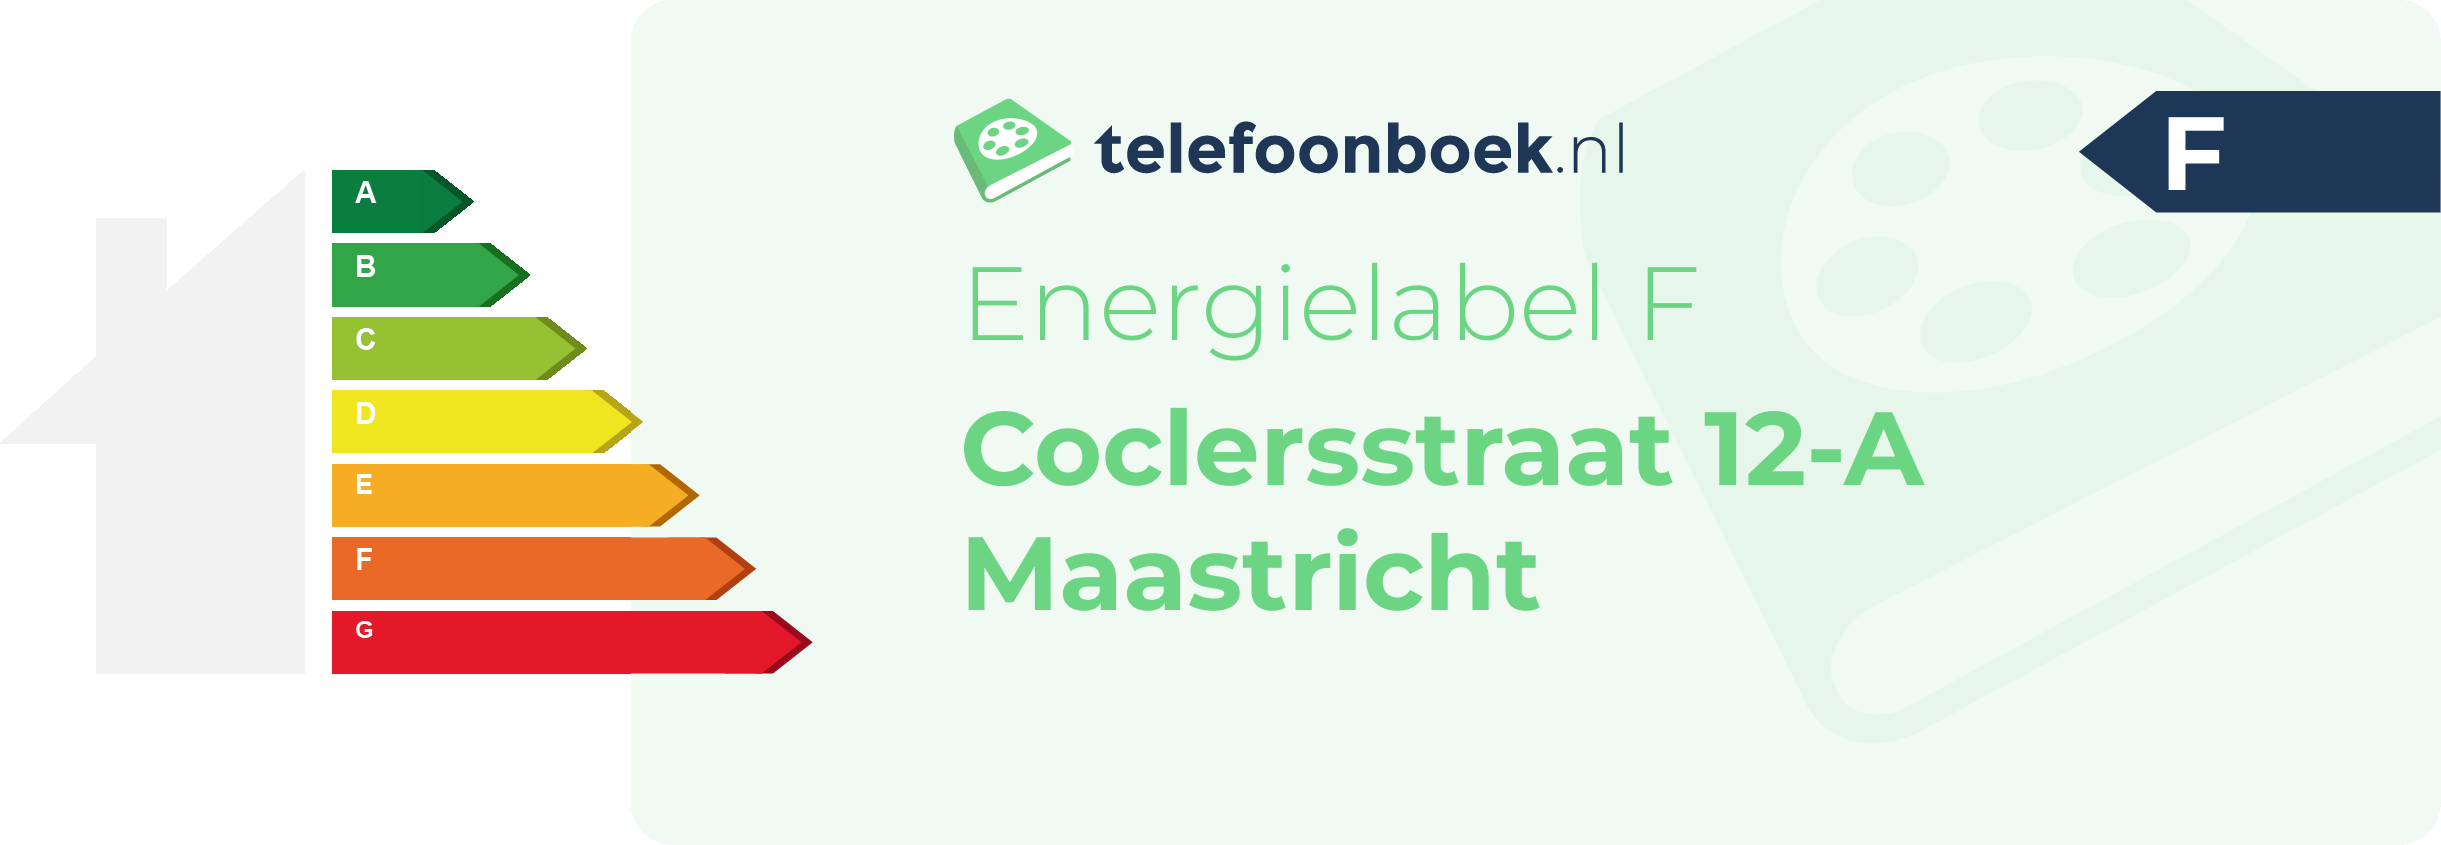 Energielabel Coclersstraat 12-A Maastricht